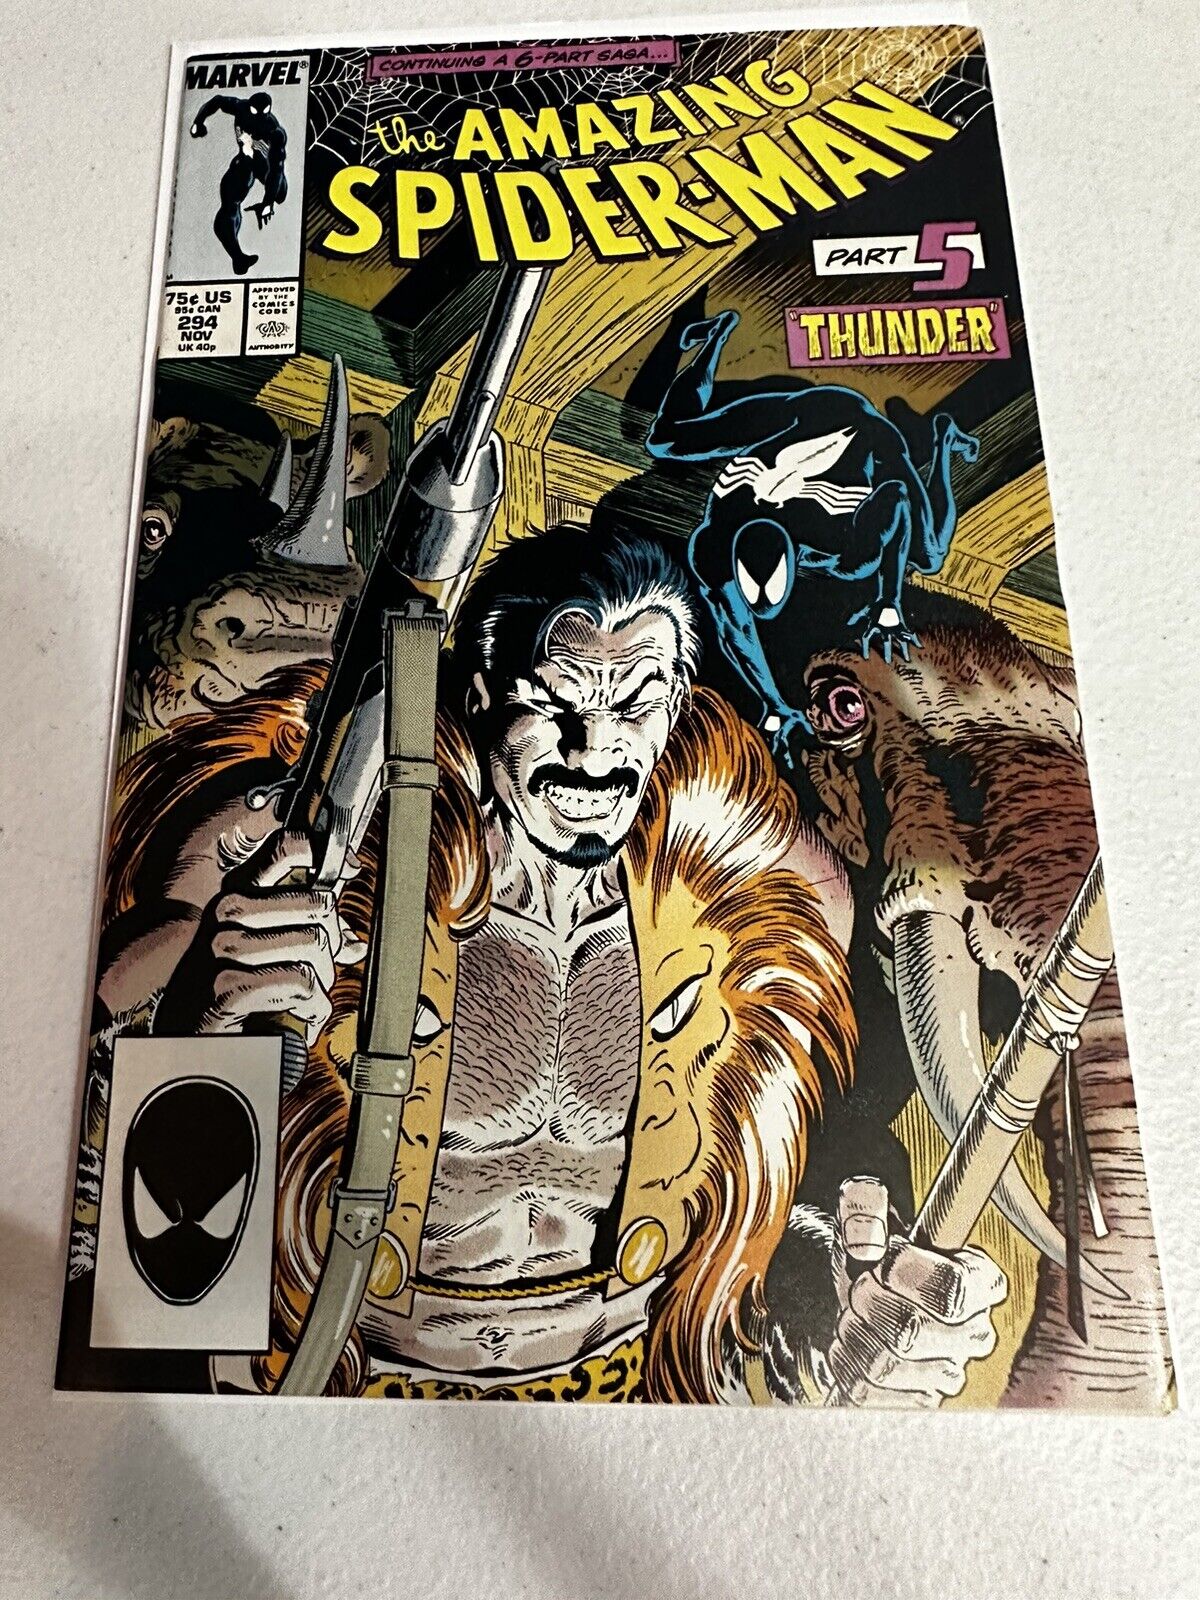 The Amazing Spider-Man #294 (Marvel Comics November 1987)